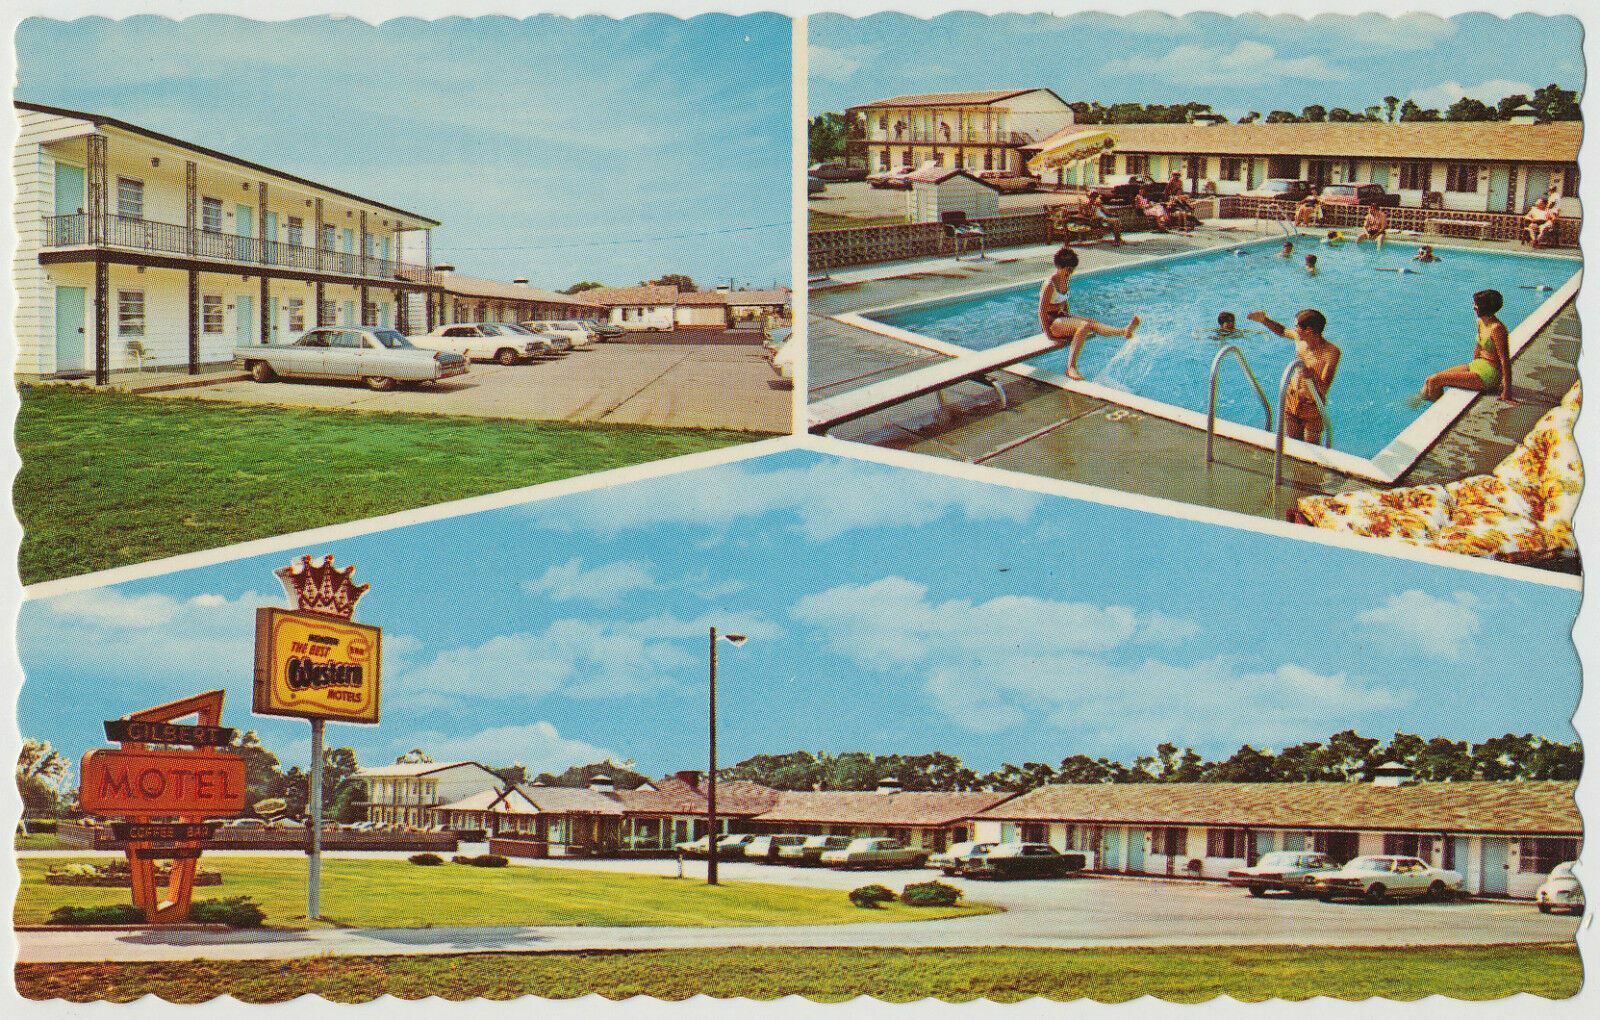 Gilbert Motel, Des Moines, Iowa 